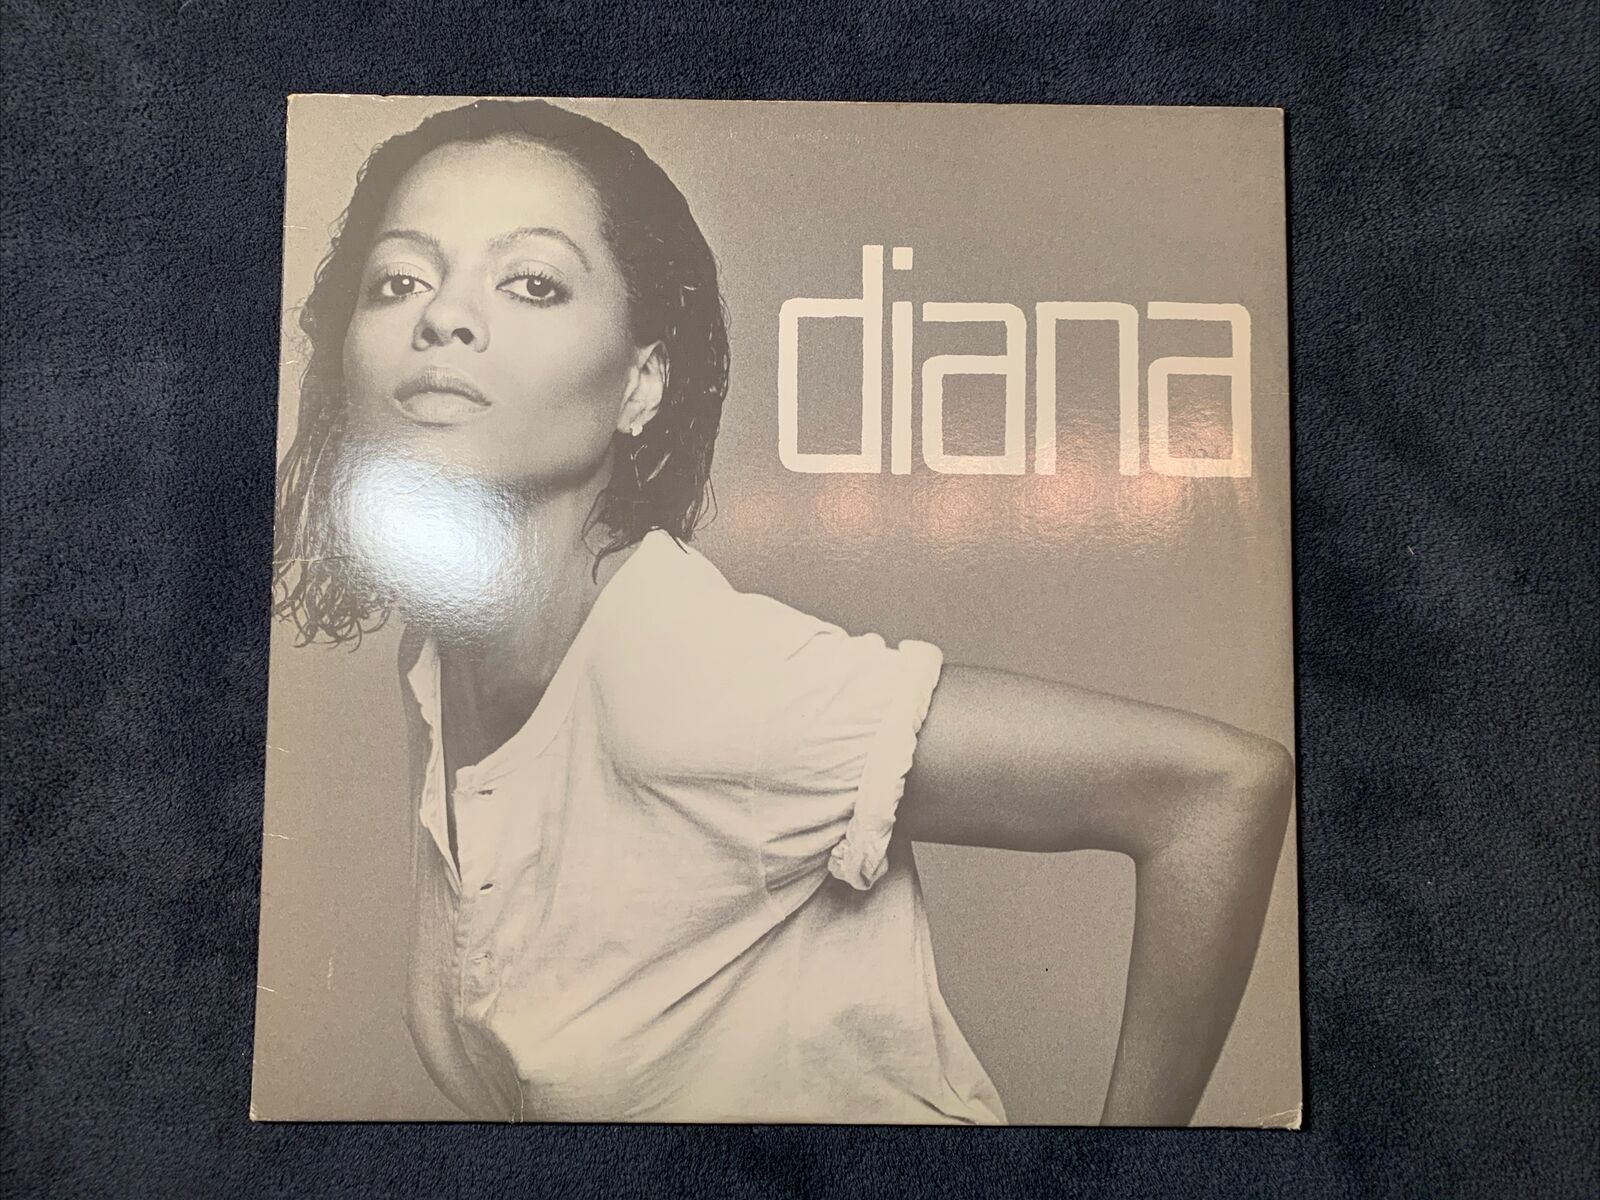 DIANA ROSS “Diana” Self Title LP Motown